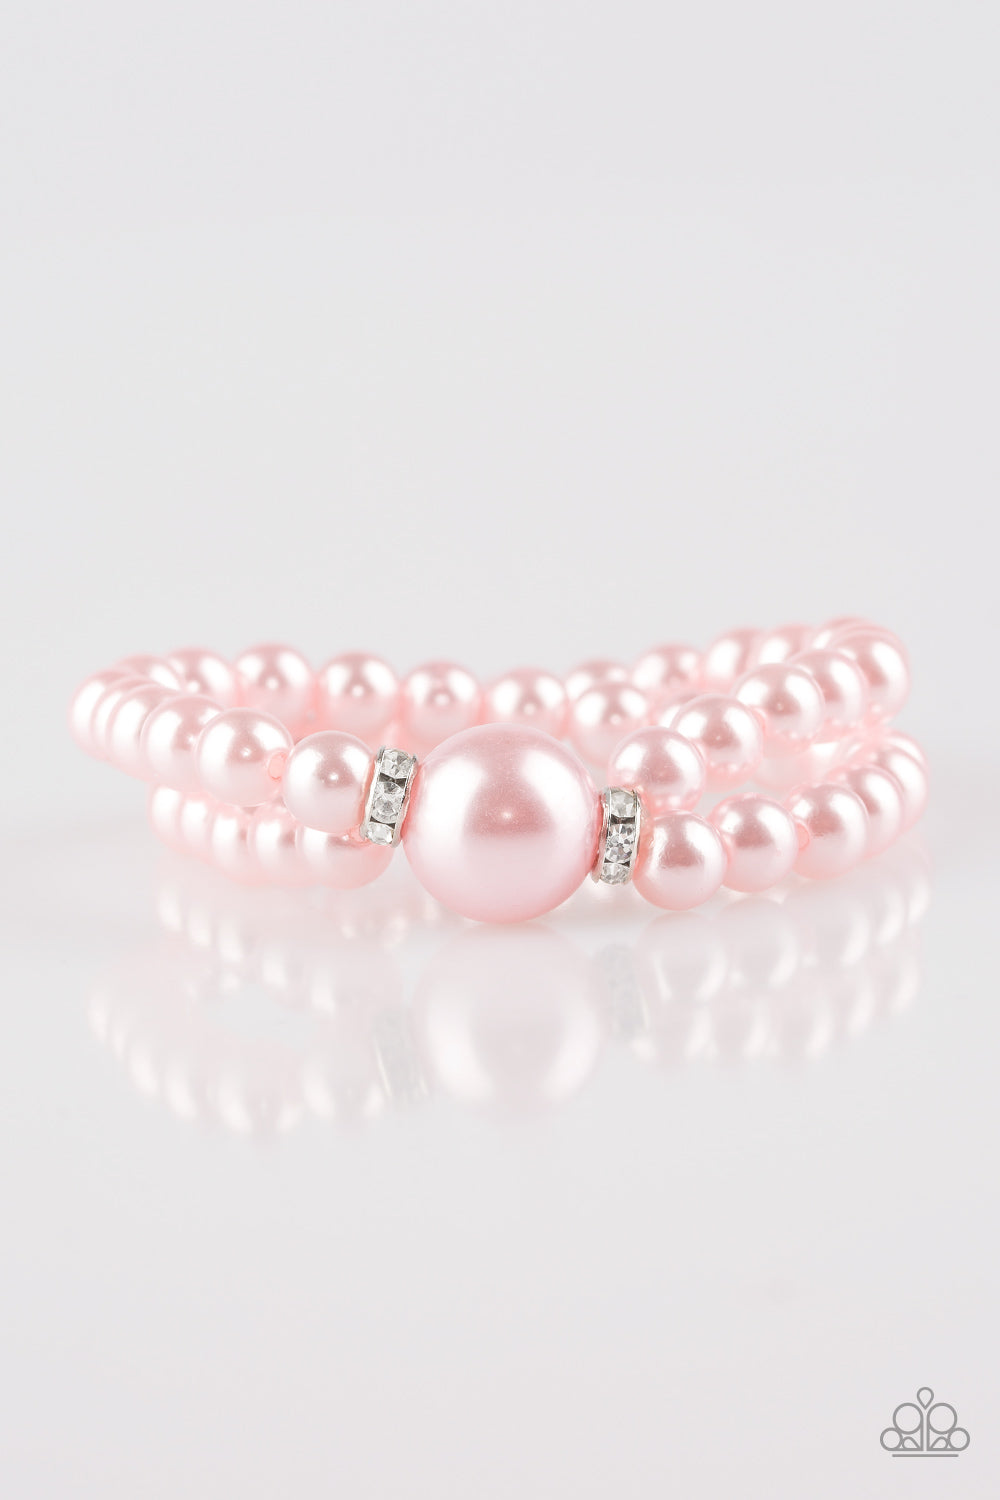 Romantic Redux- Pink Bracelet